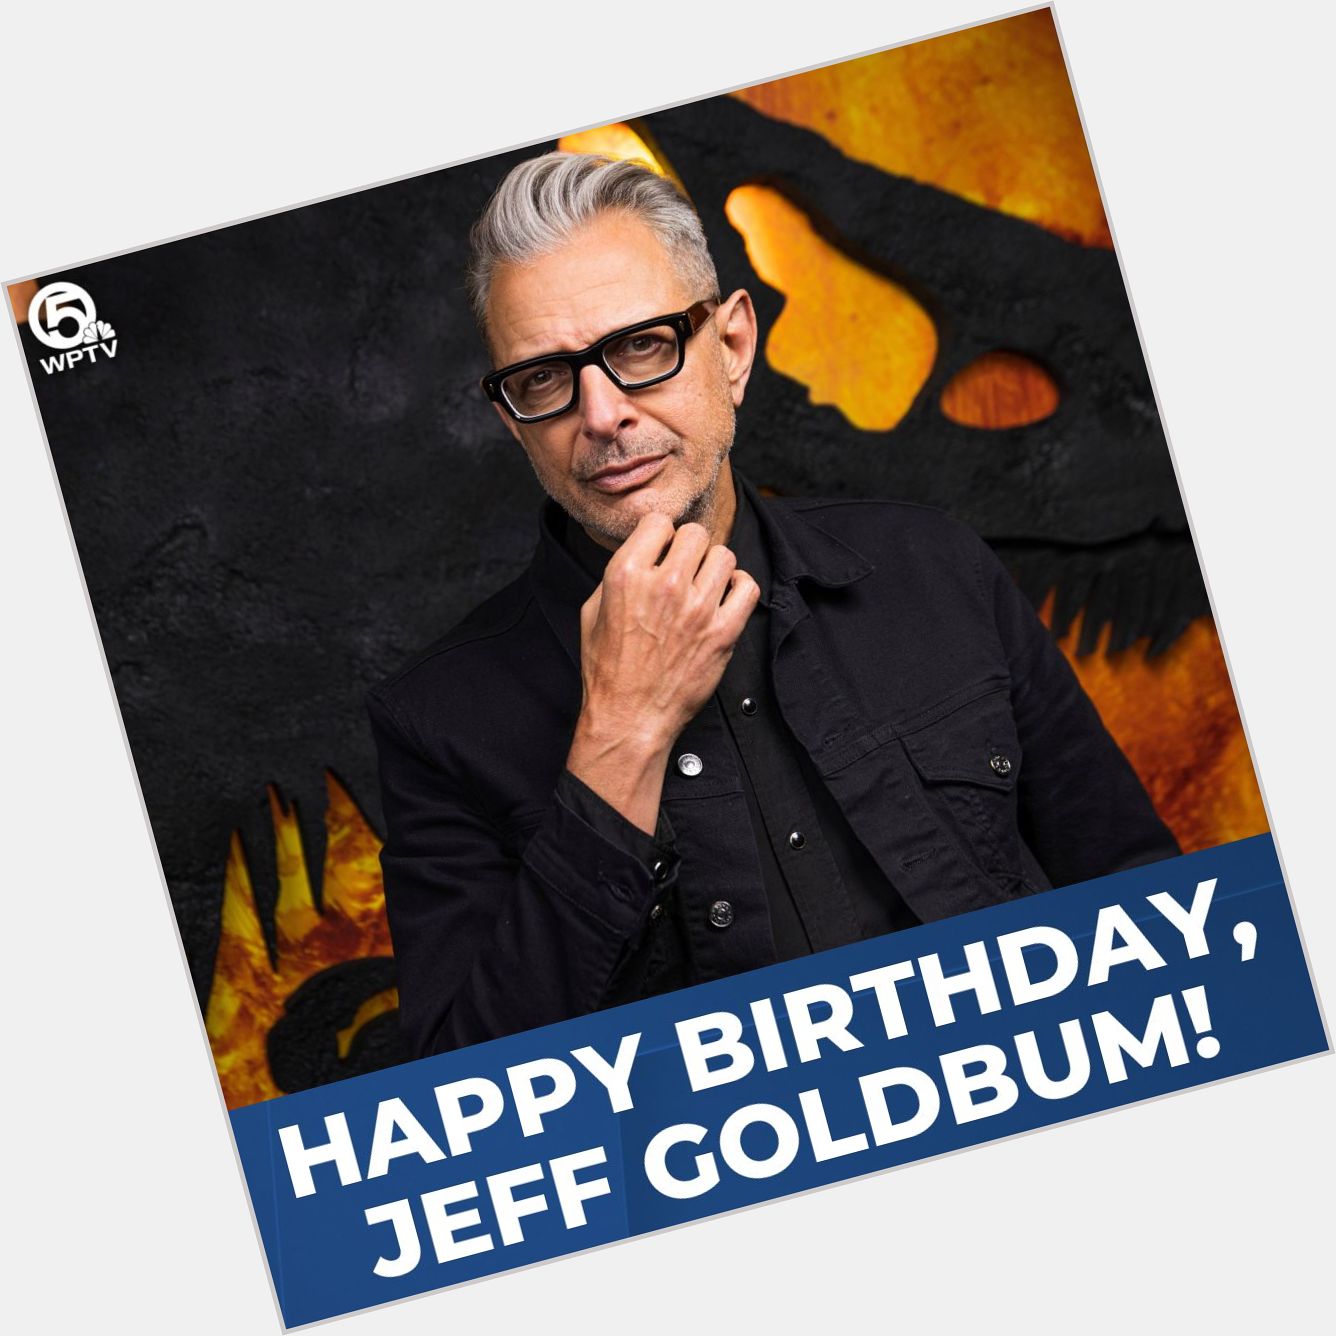 Happy Birthday, Jeff Goldblum! The Jurassic Park star turns 70 today 